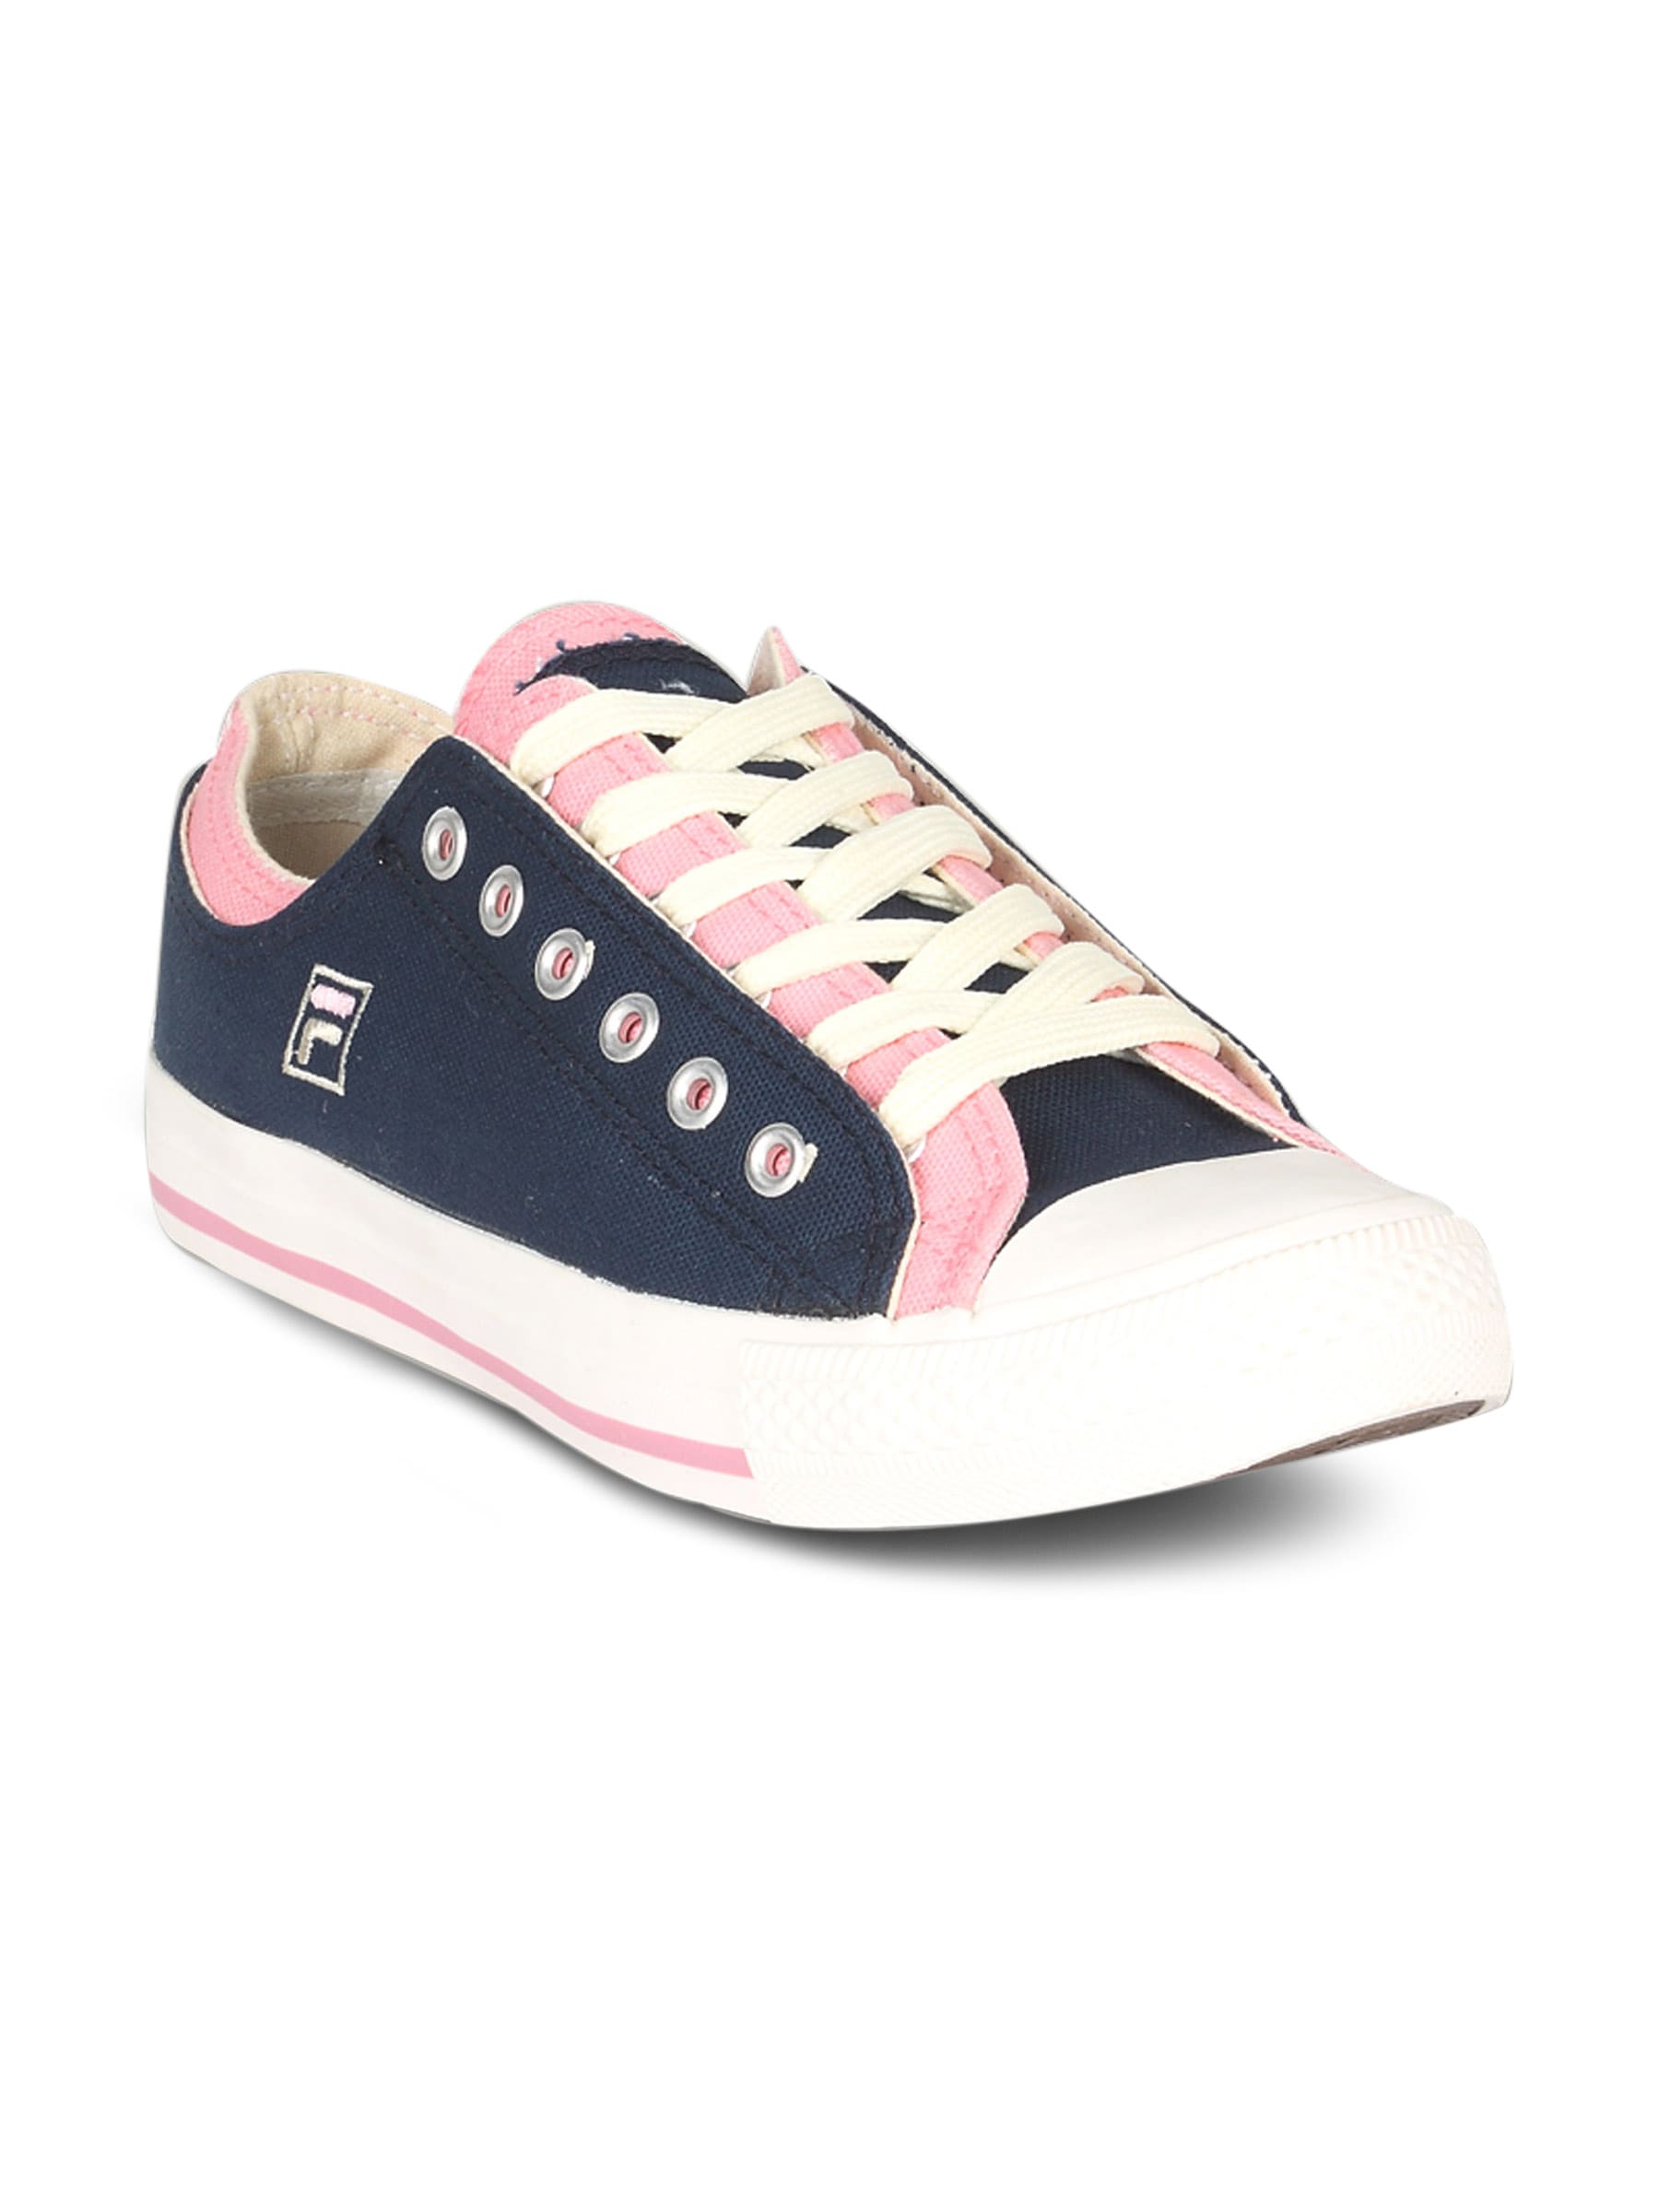 Fila Men's Union Navy Pink Shoe